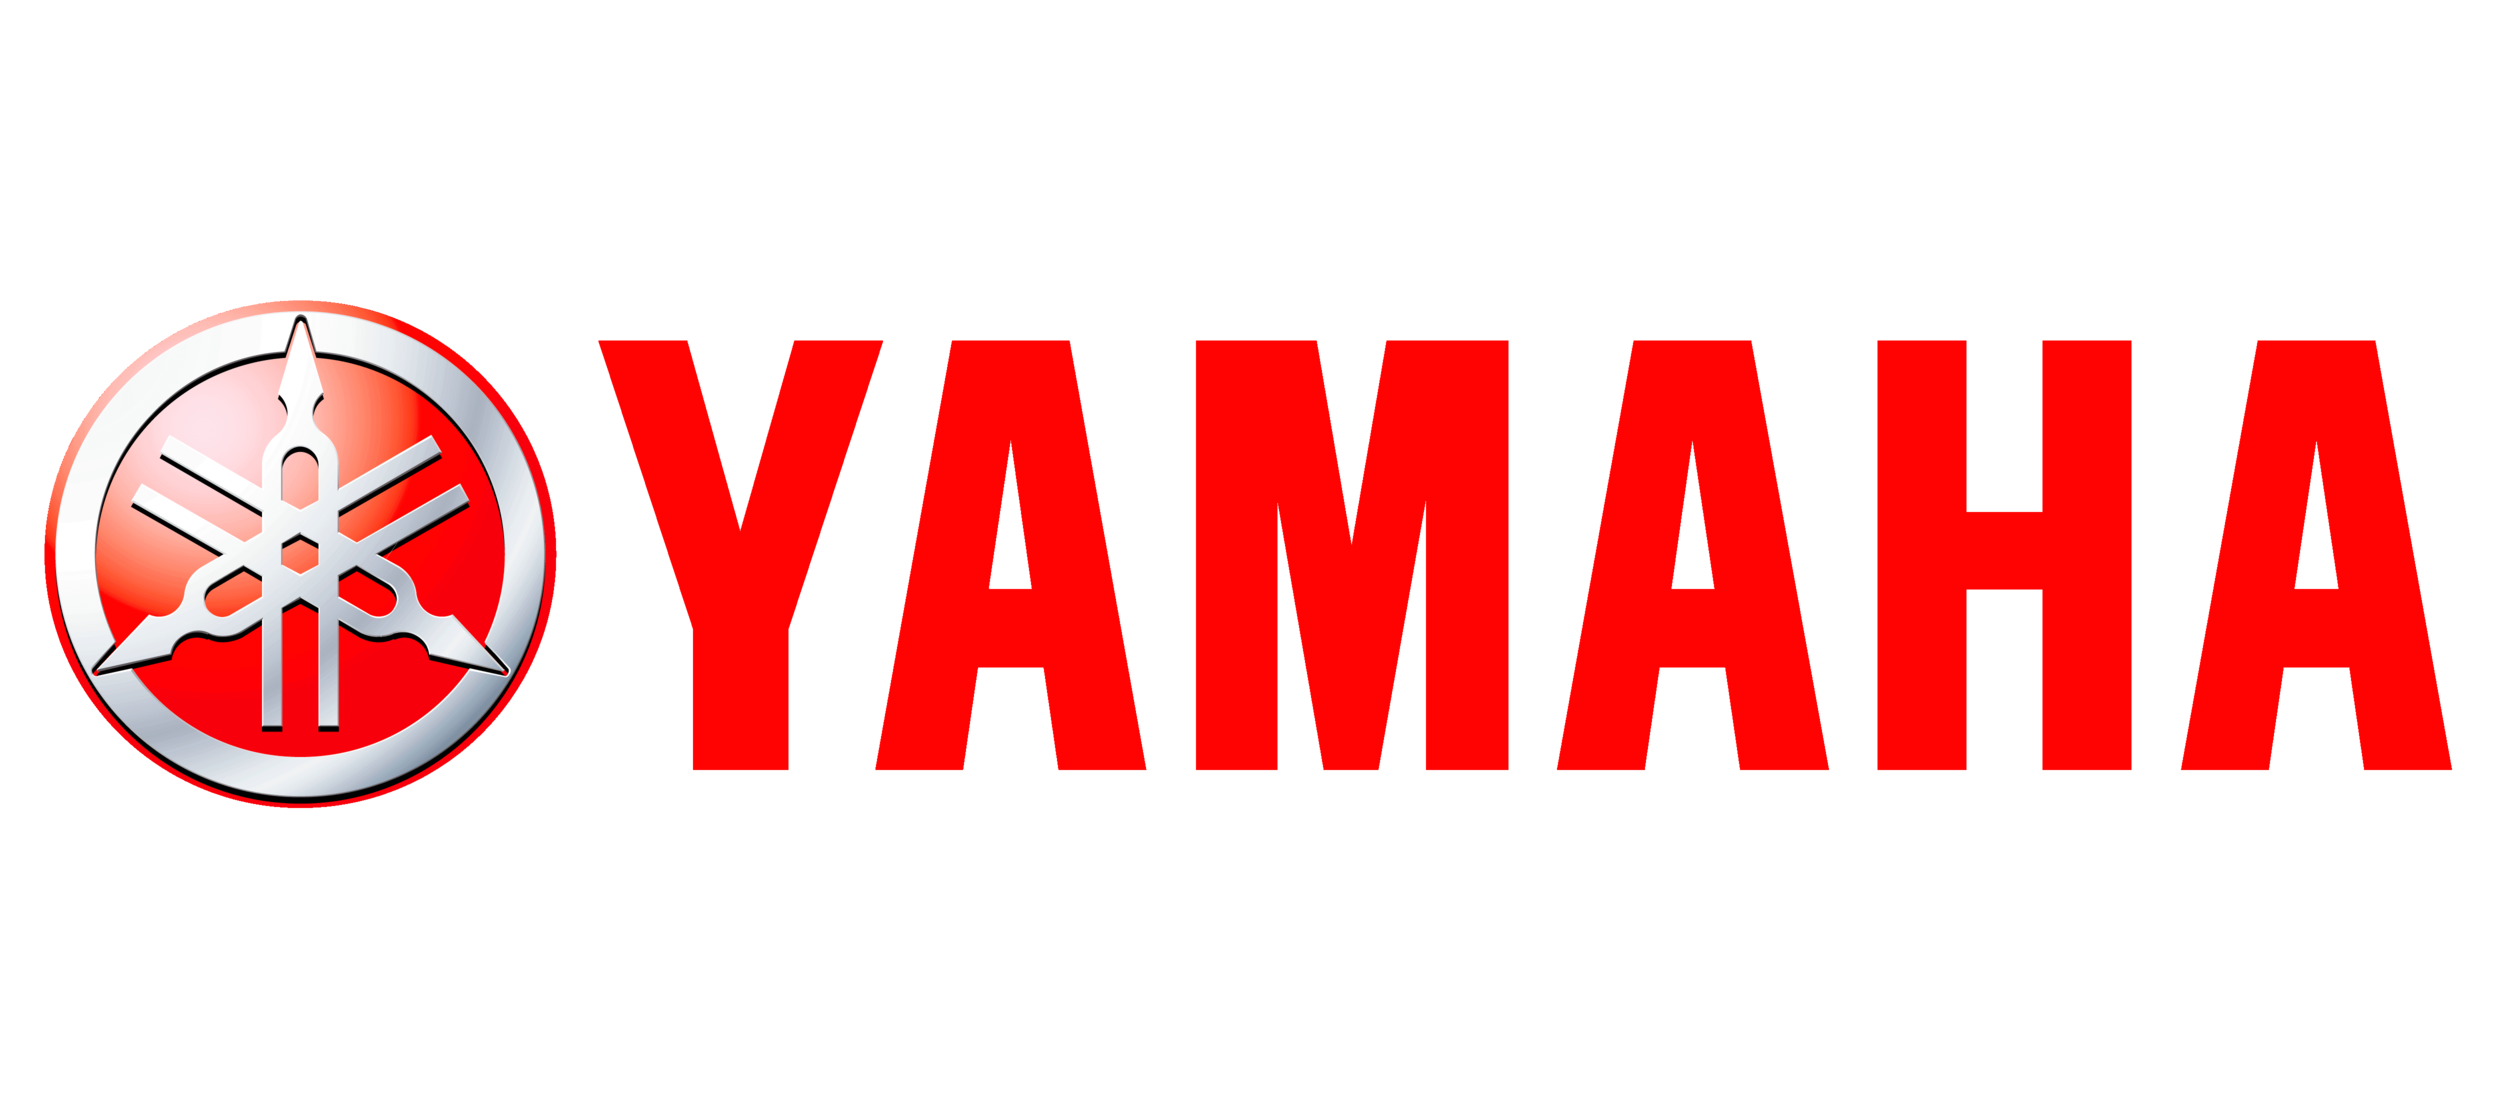 yamaha-logo-motorcycle-brands-png-3.png